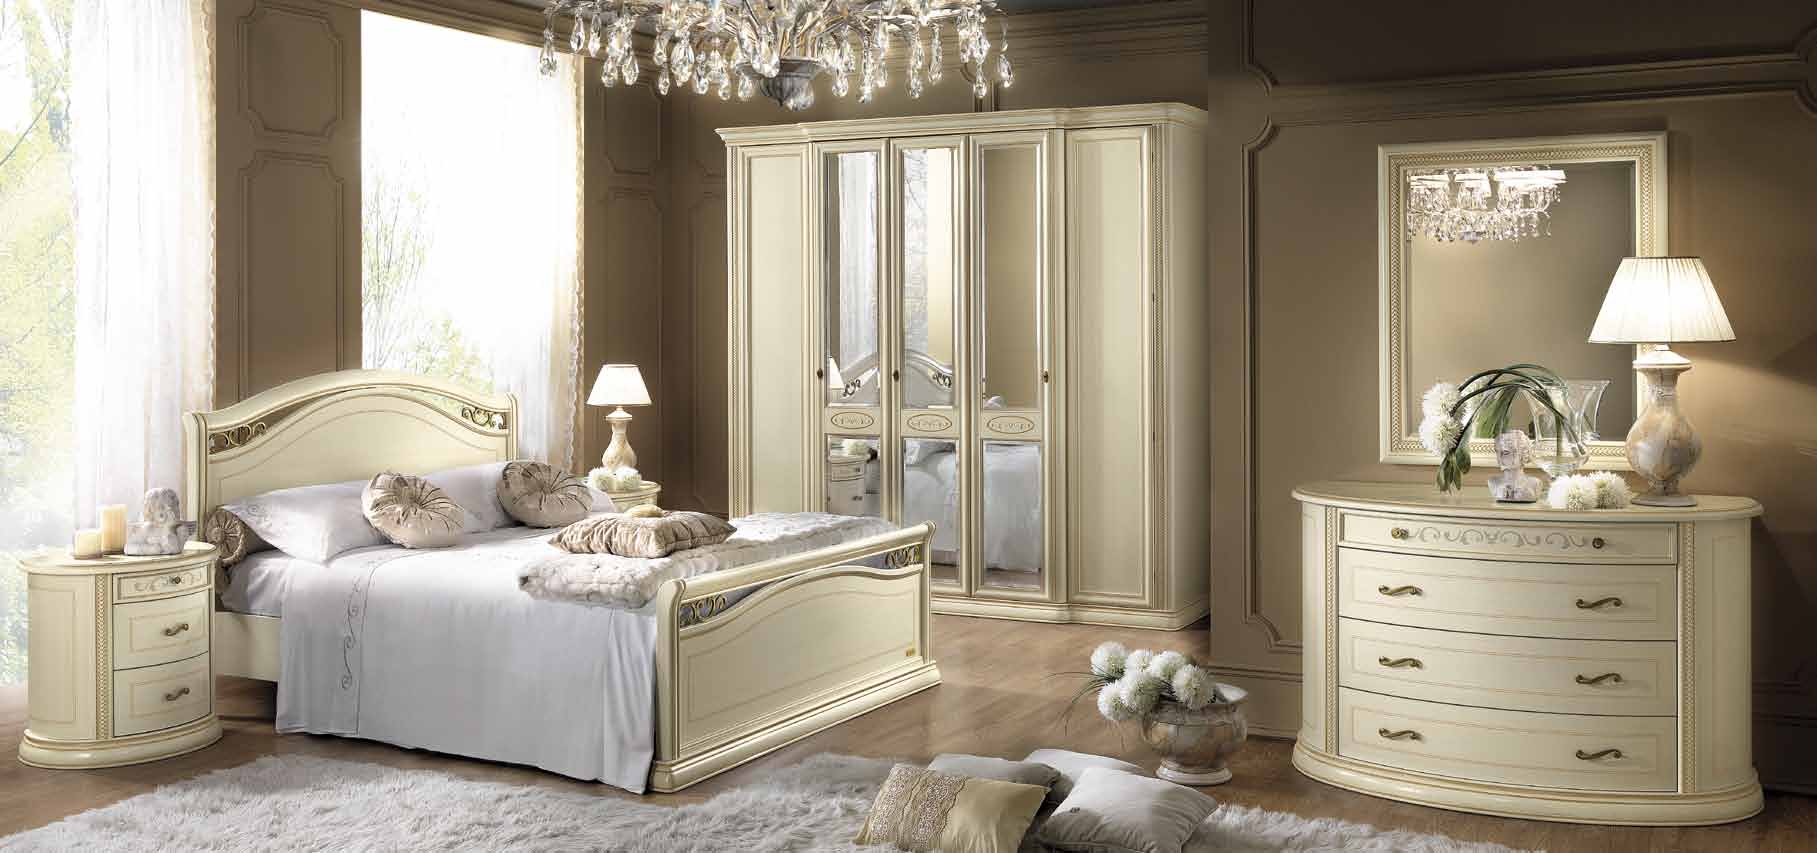 Cream bedroom furniture ideas | Hawk Haven